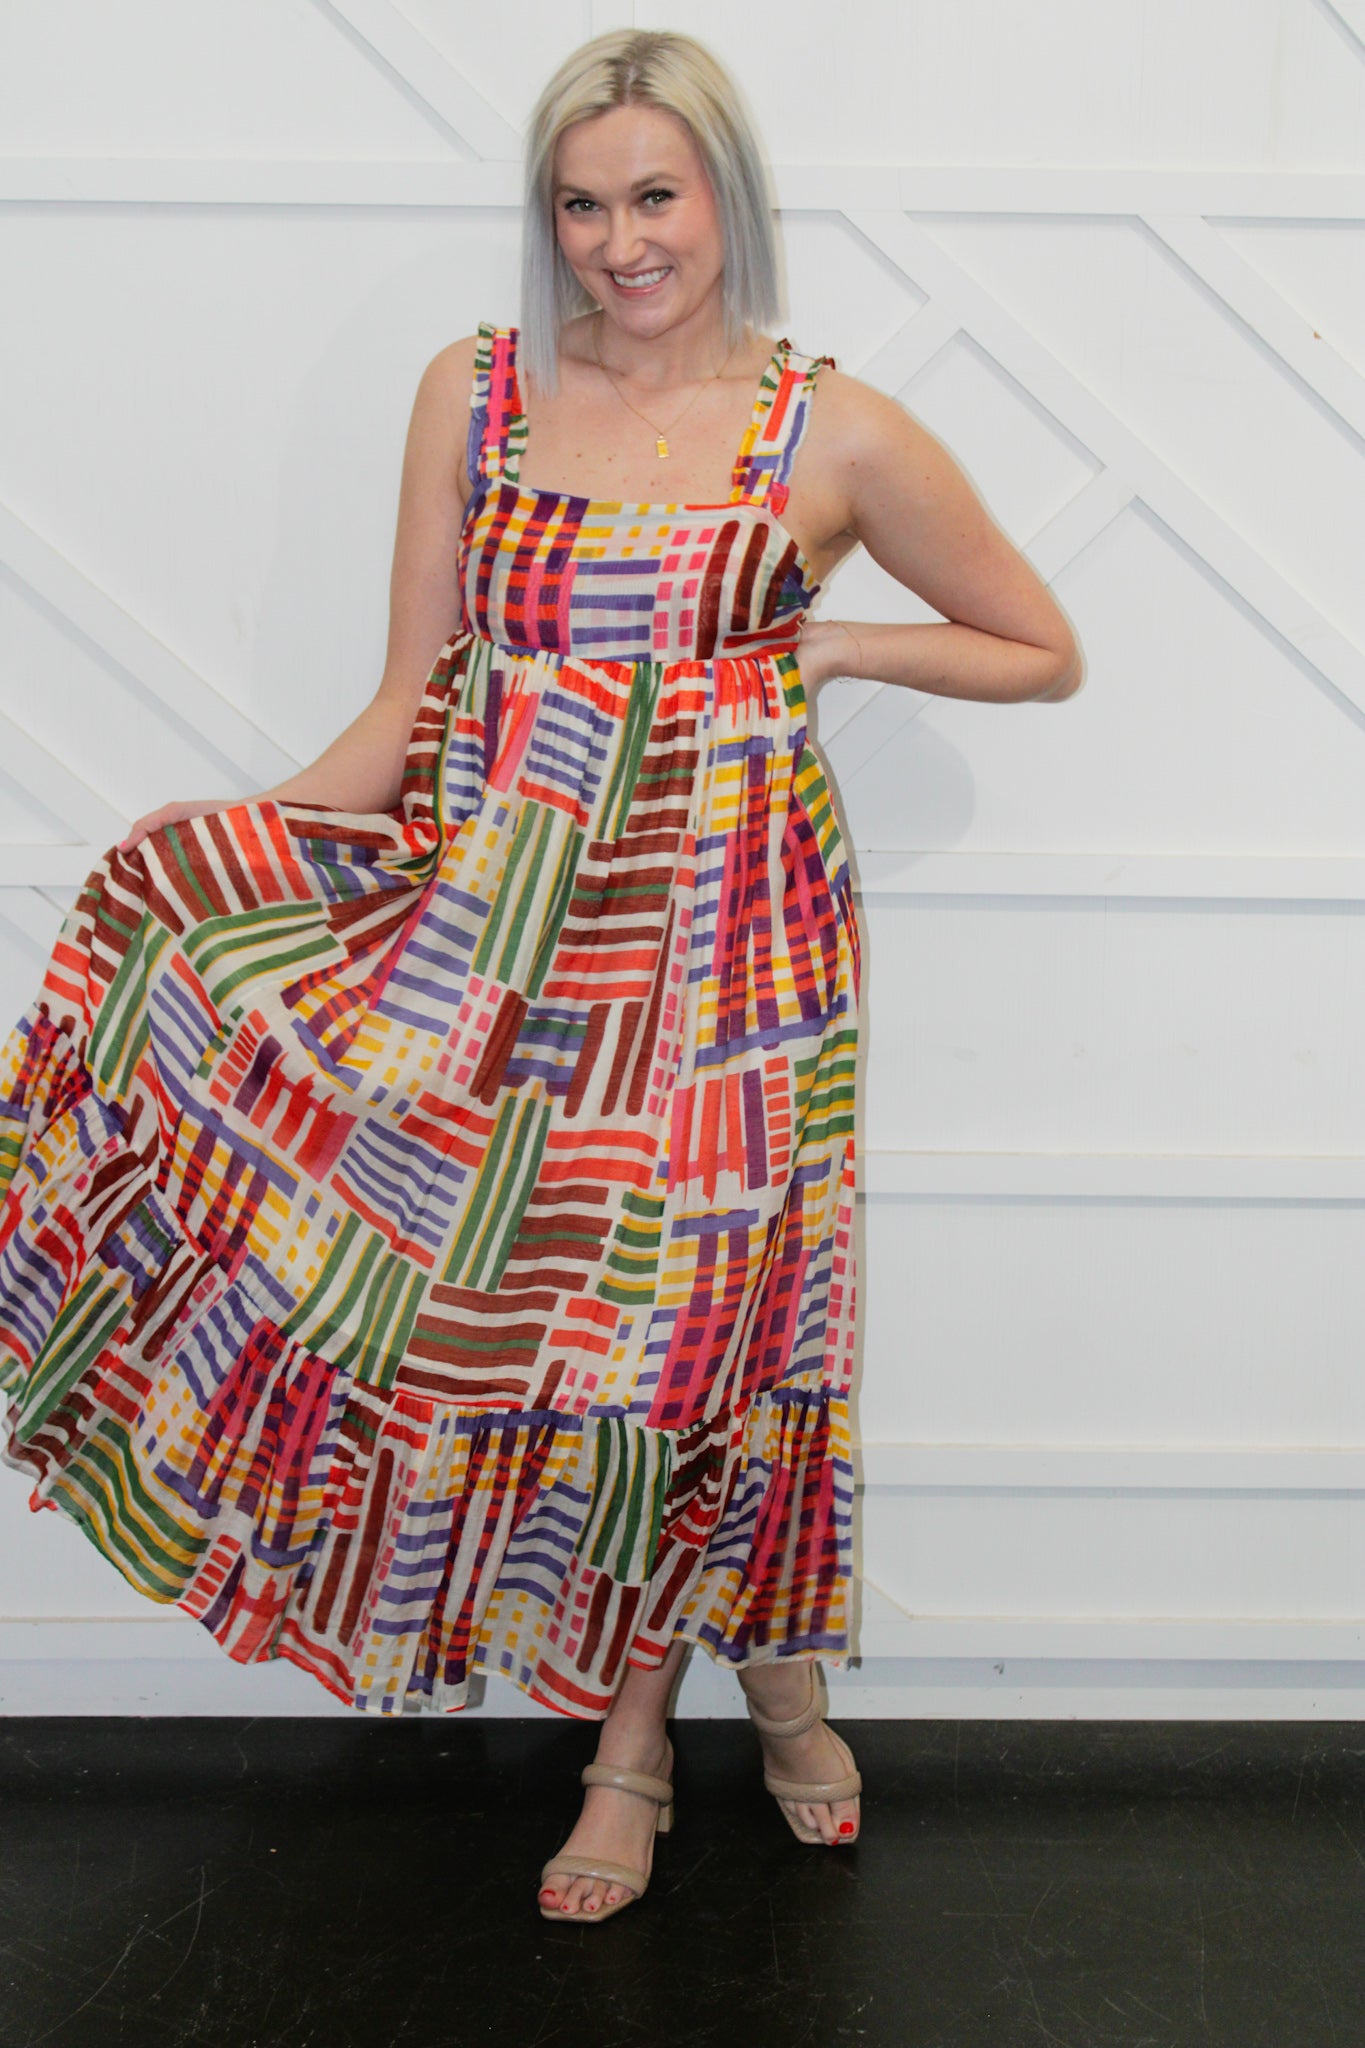 Jessica Tiered Print Dress